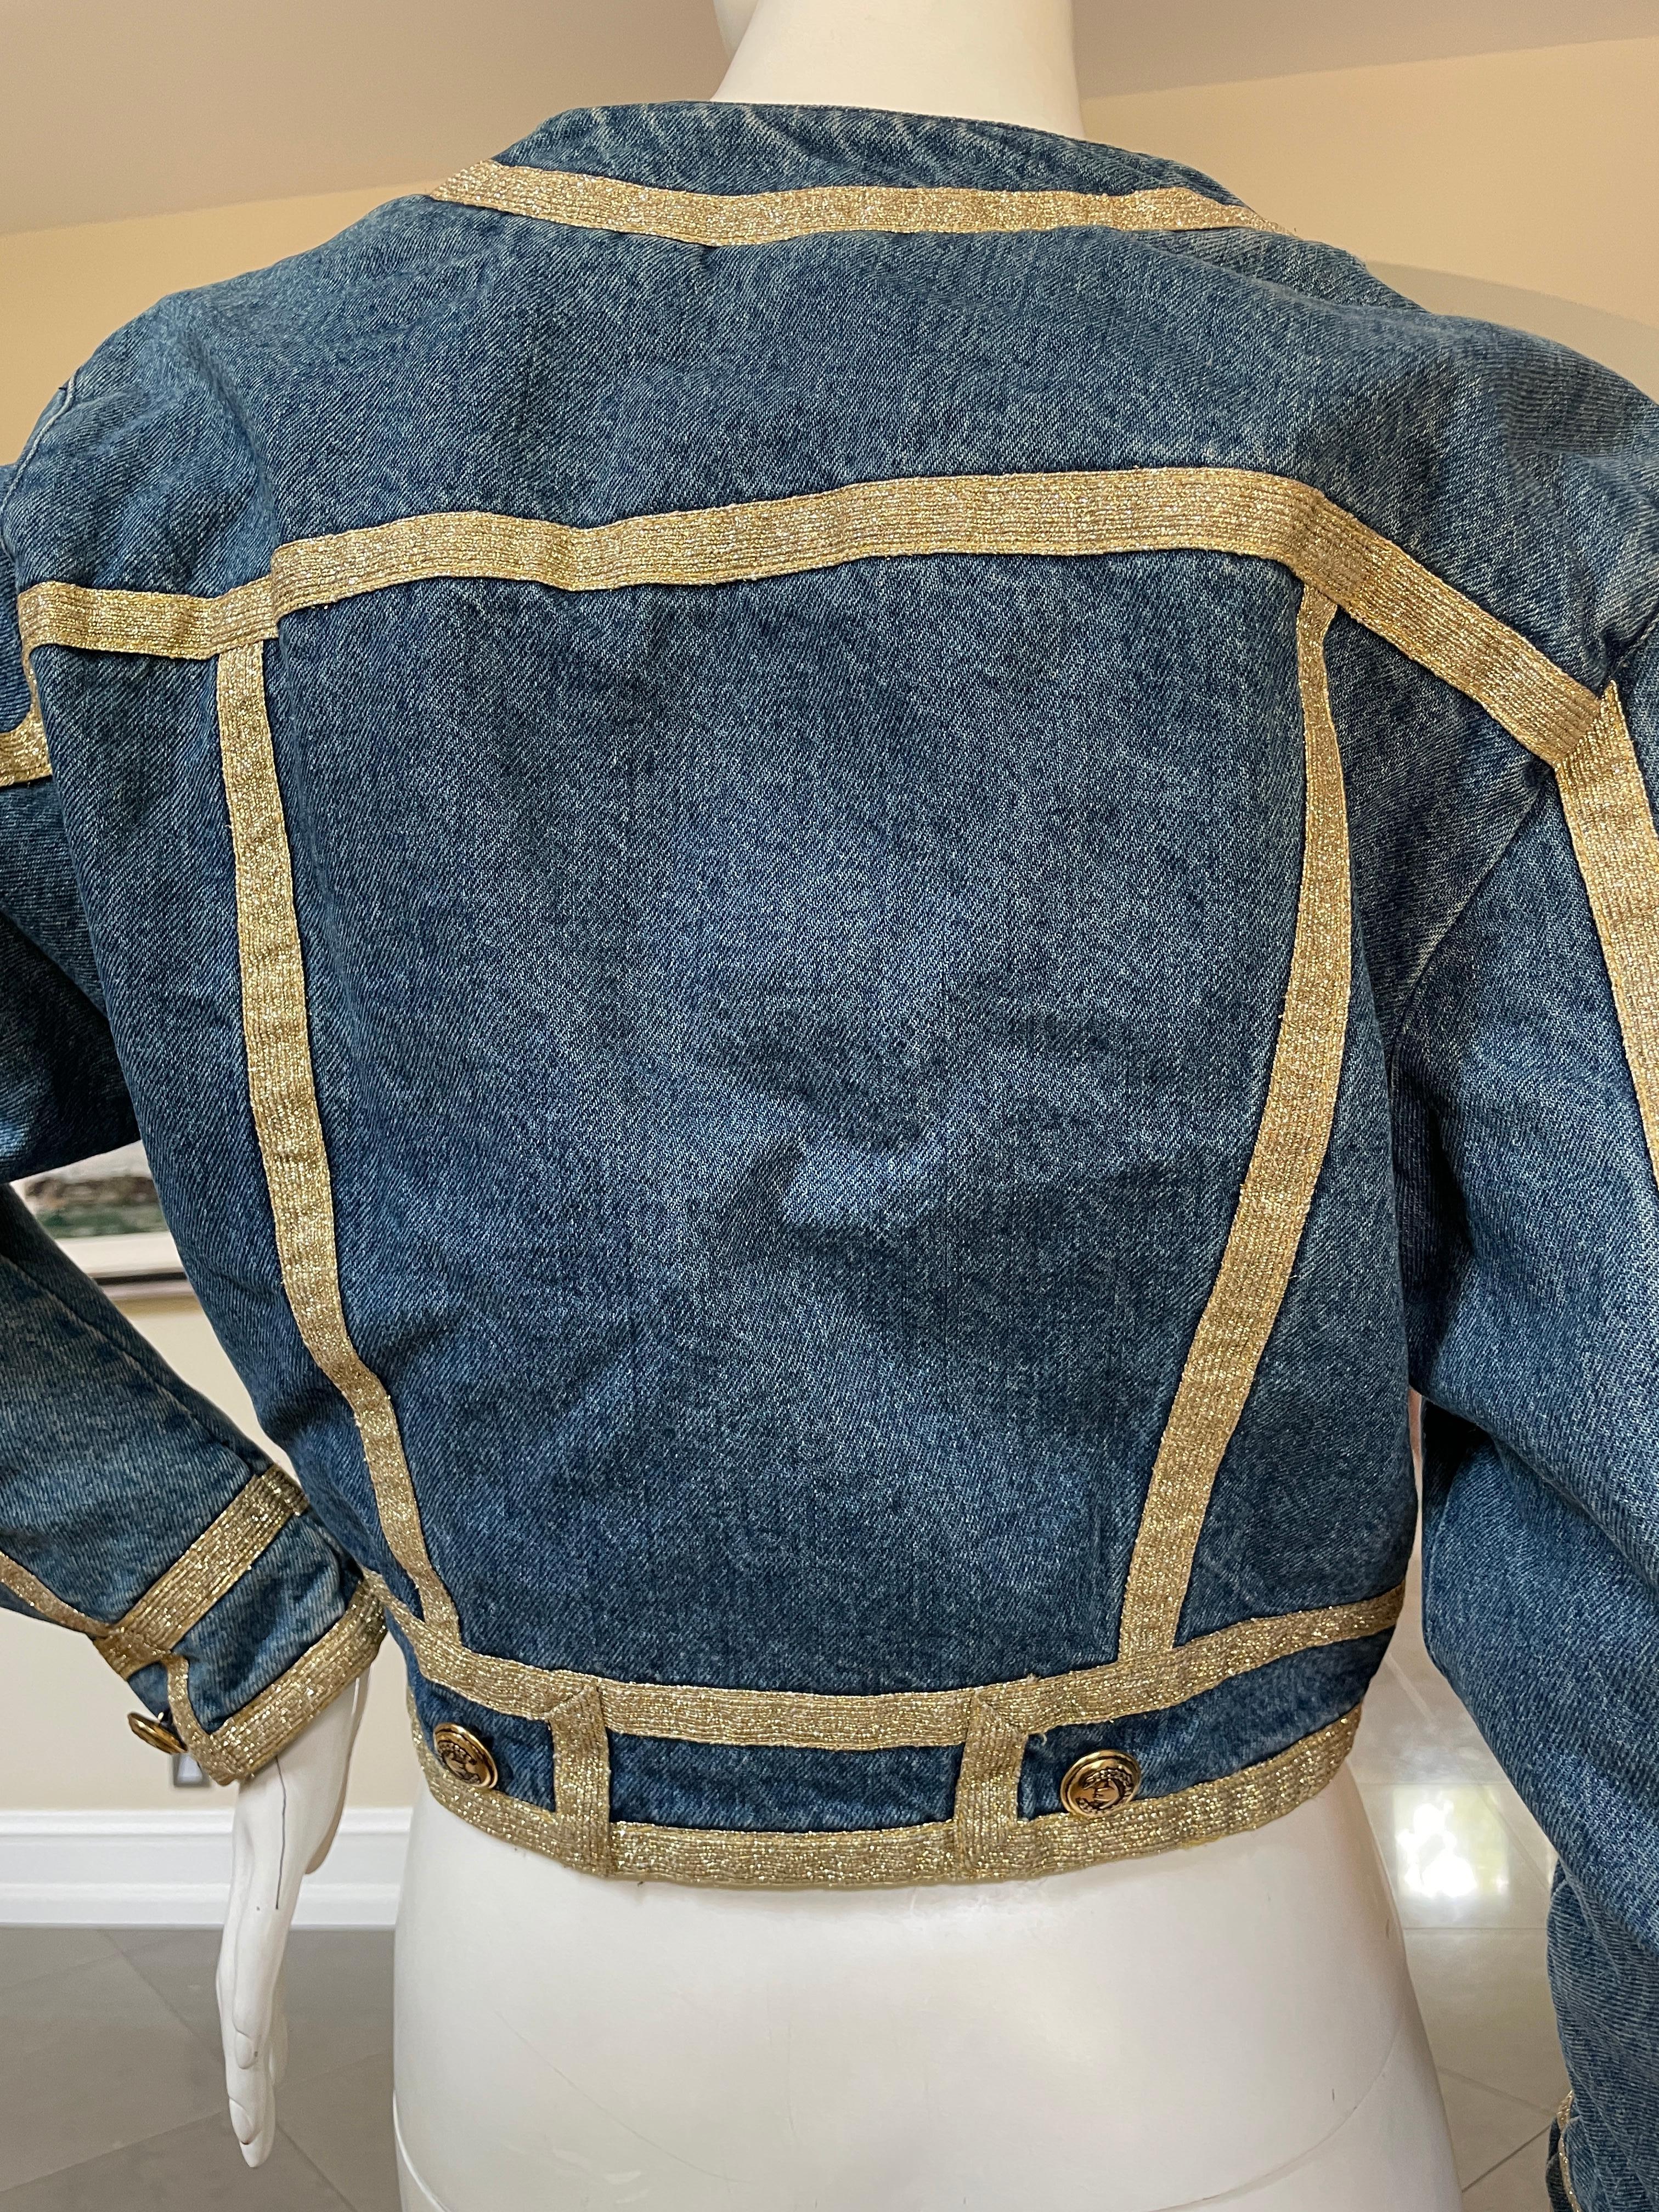 Moschino Jeans Vintage Denim Jacket with Trompe l'oeil Gold Trim Lapels For Sale 1